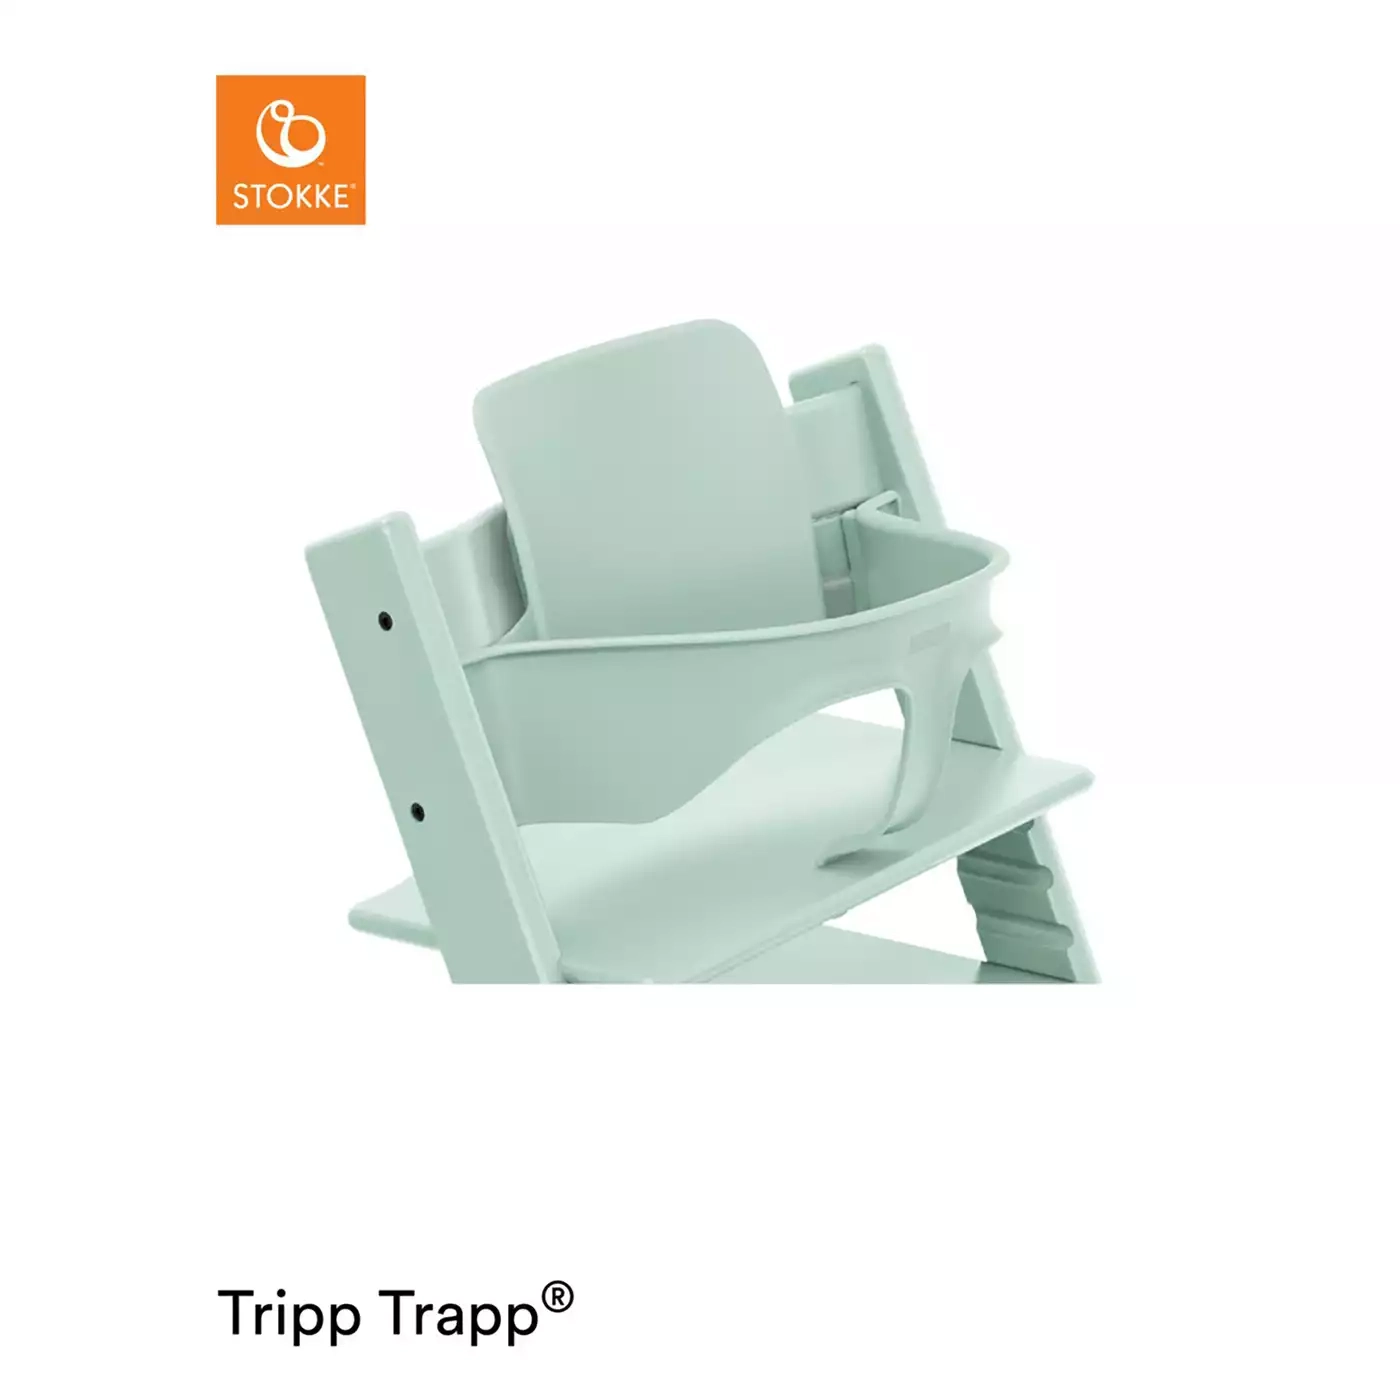 Tripp Trapp® Baby Set Soft Mint STOKKE Mint 2000578900403 3